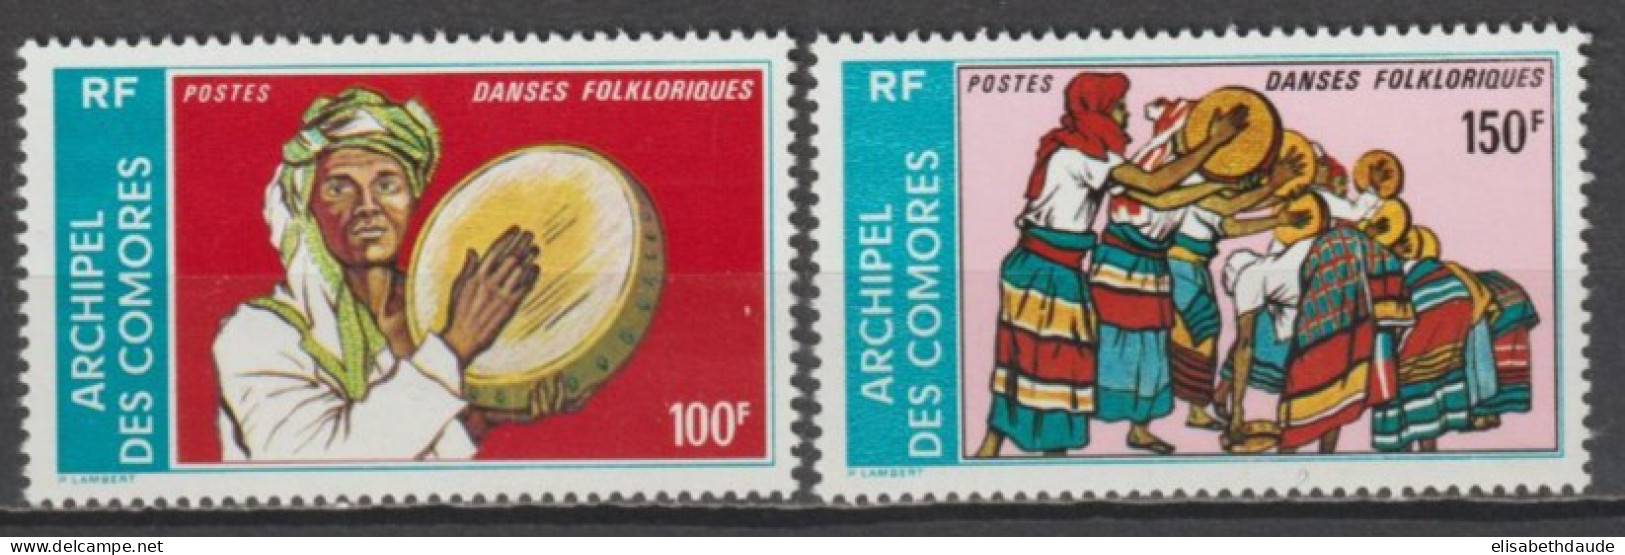 COMORES - 1975 - RARE ! DERNIERE SERIE EMISE  - YVERT 104A/B ** MNH  - COTE = 300 EUR. PRIX DISCOUNT ! - Unused Stamps